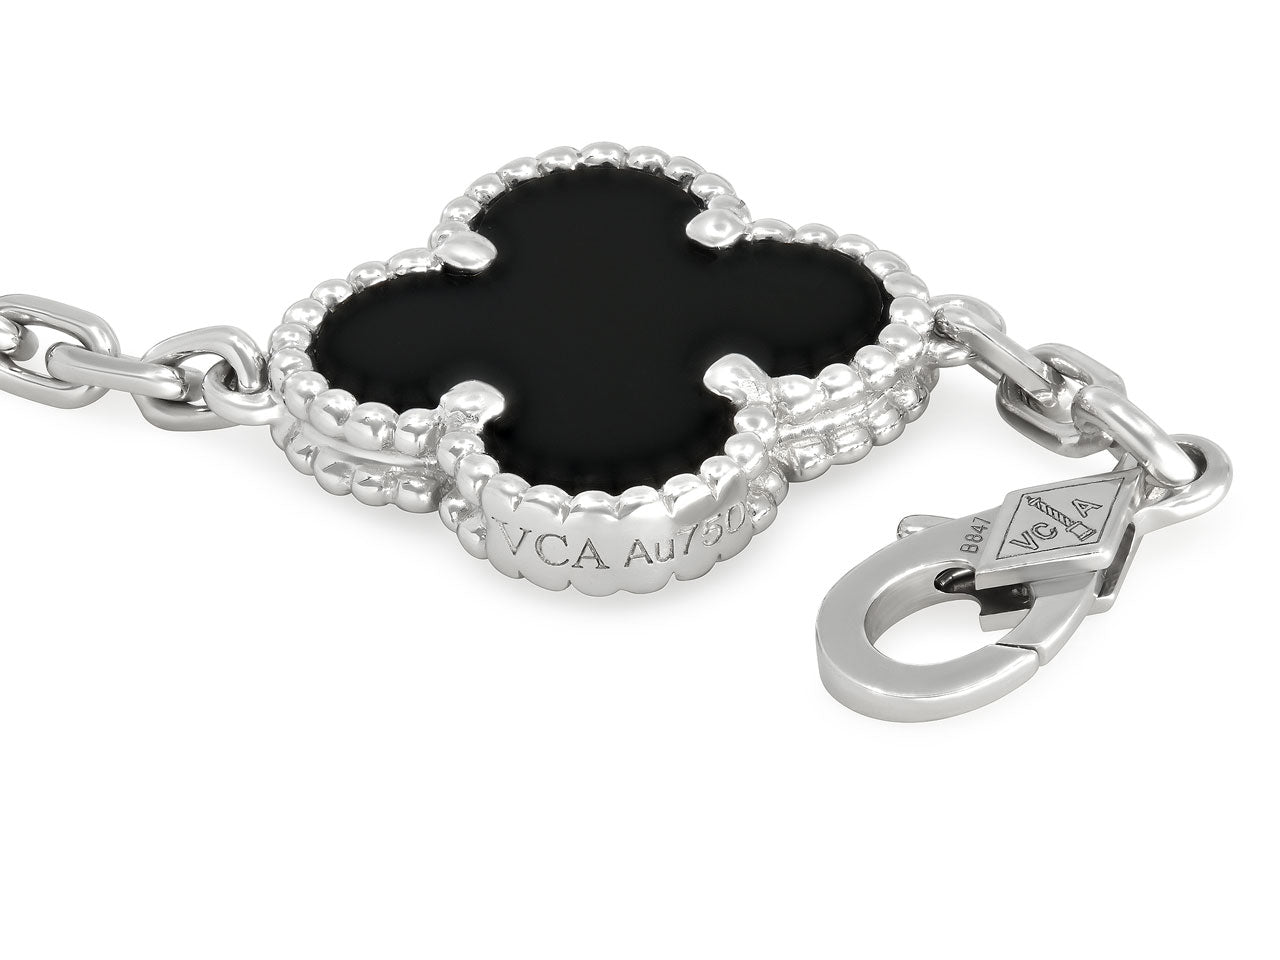 Van Cleef & Arpels 'Vintage Alhambra' Diamond and Onyx Bracelet in 18K White Gold